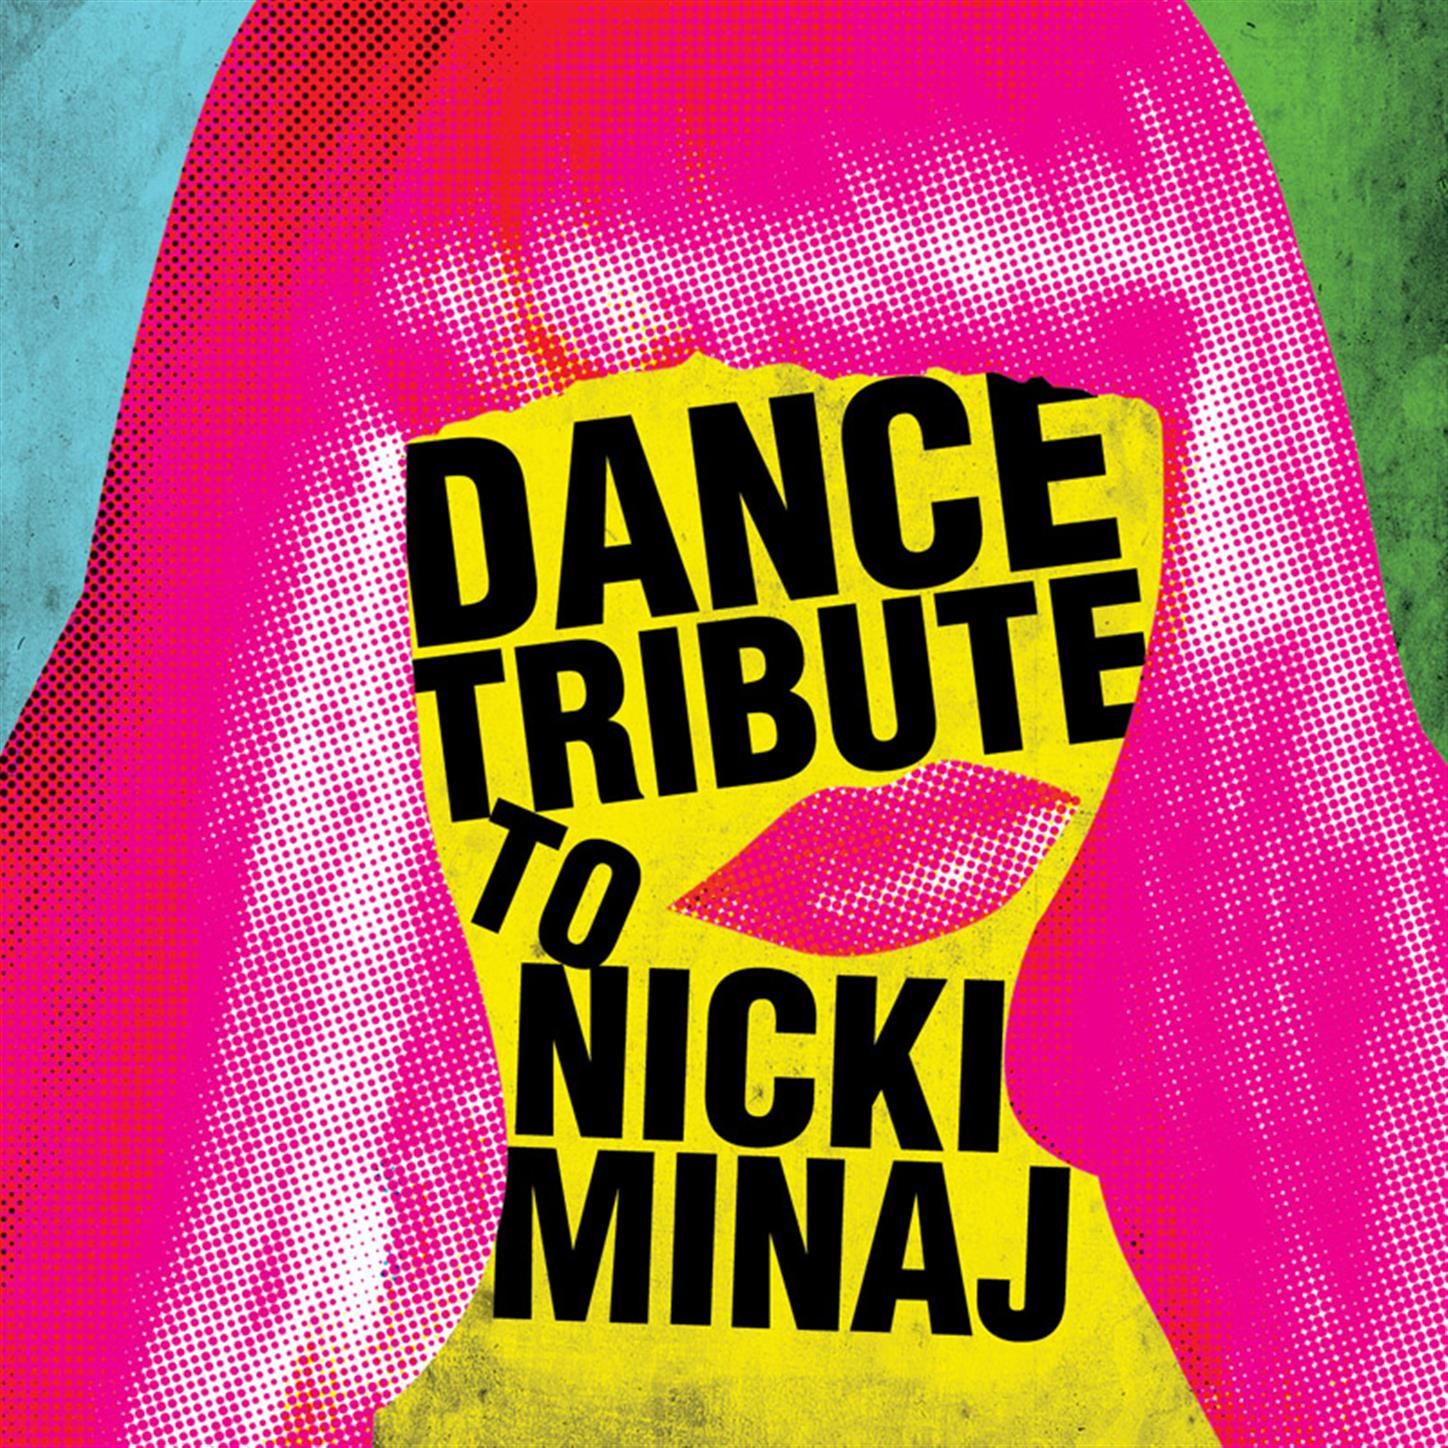 Dance Tribute to Nicki Minaj